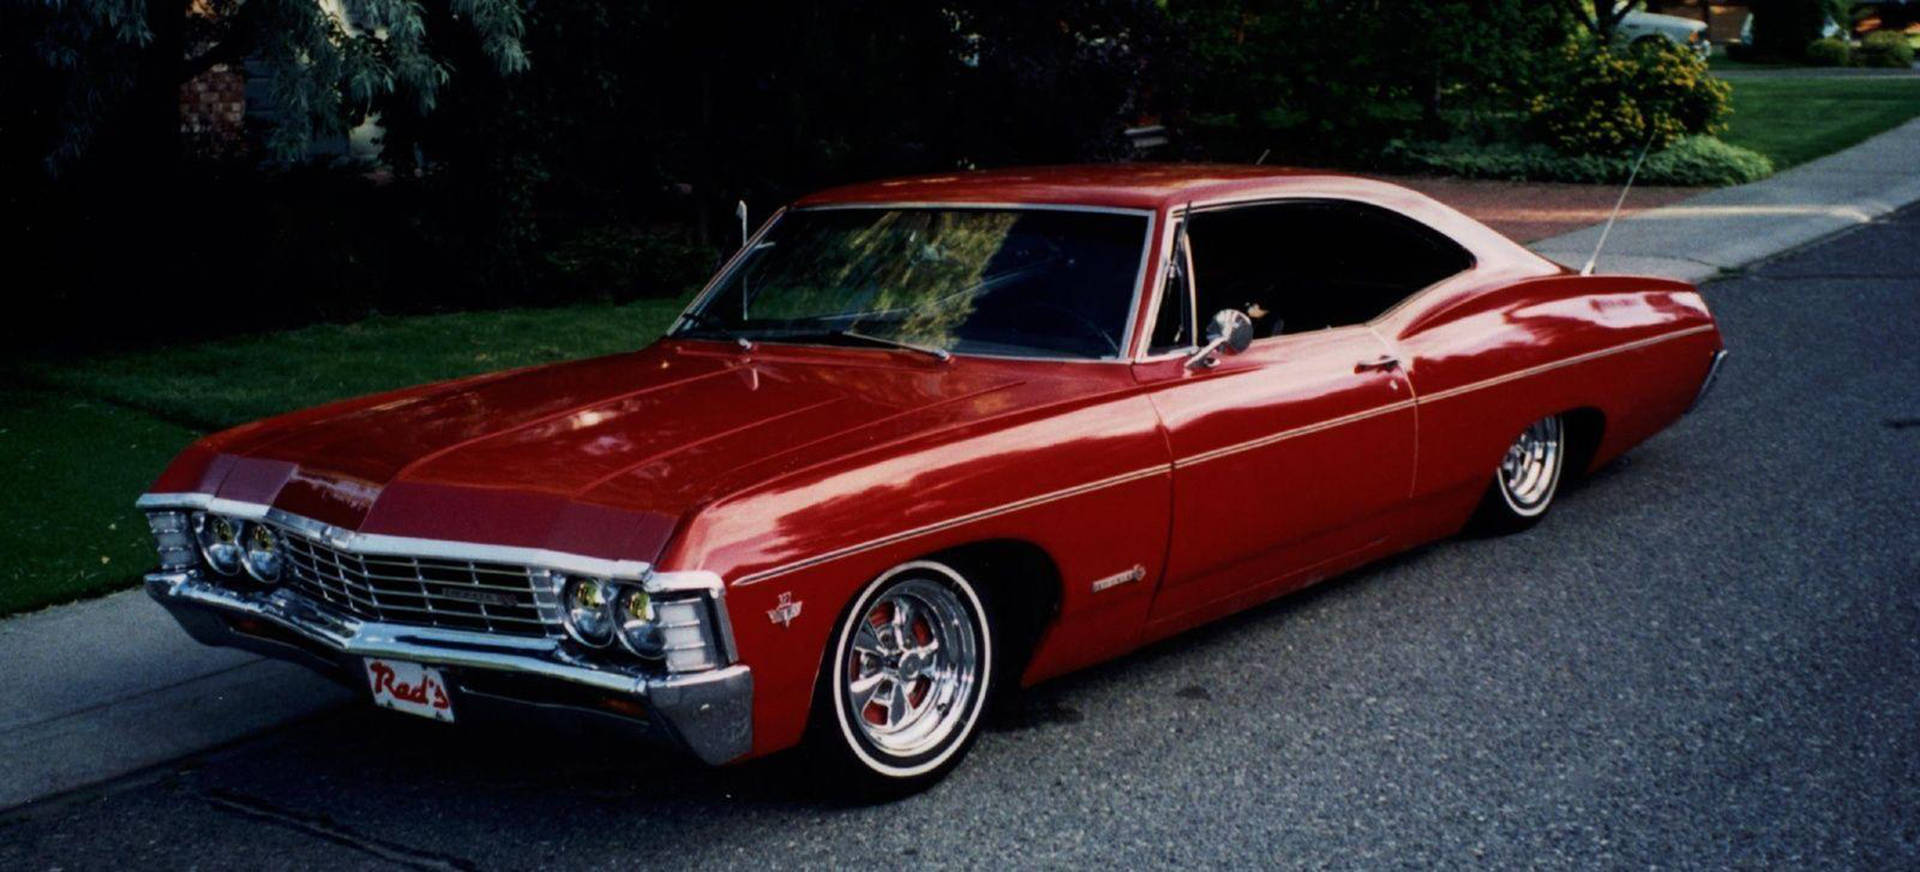 Majestic Red 1967 Chevrolet Impala Showcasing Vintage Beauty Background